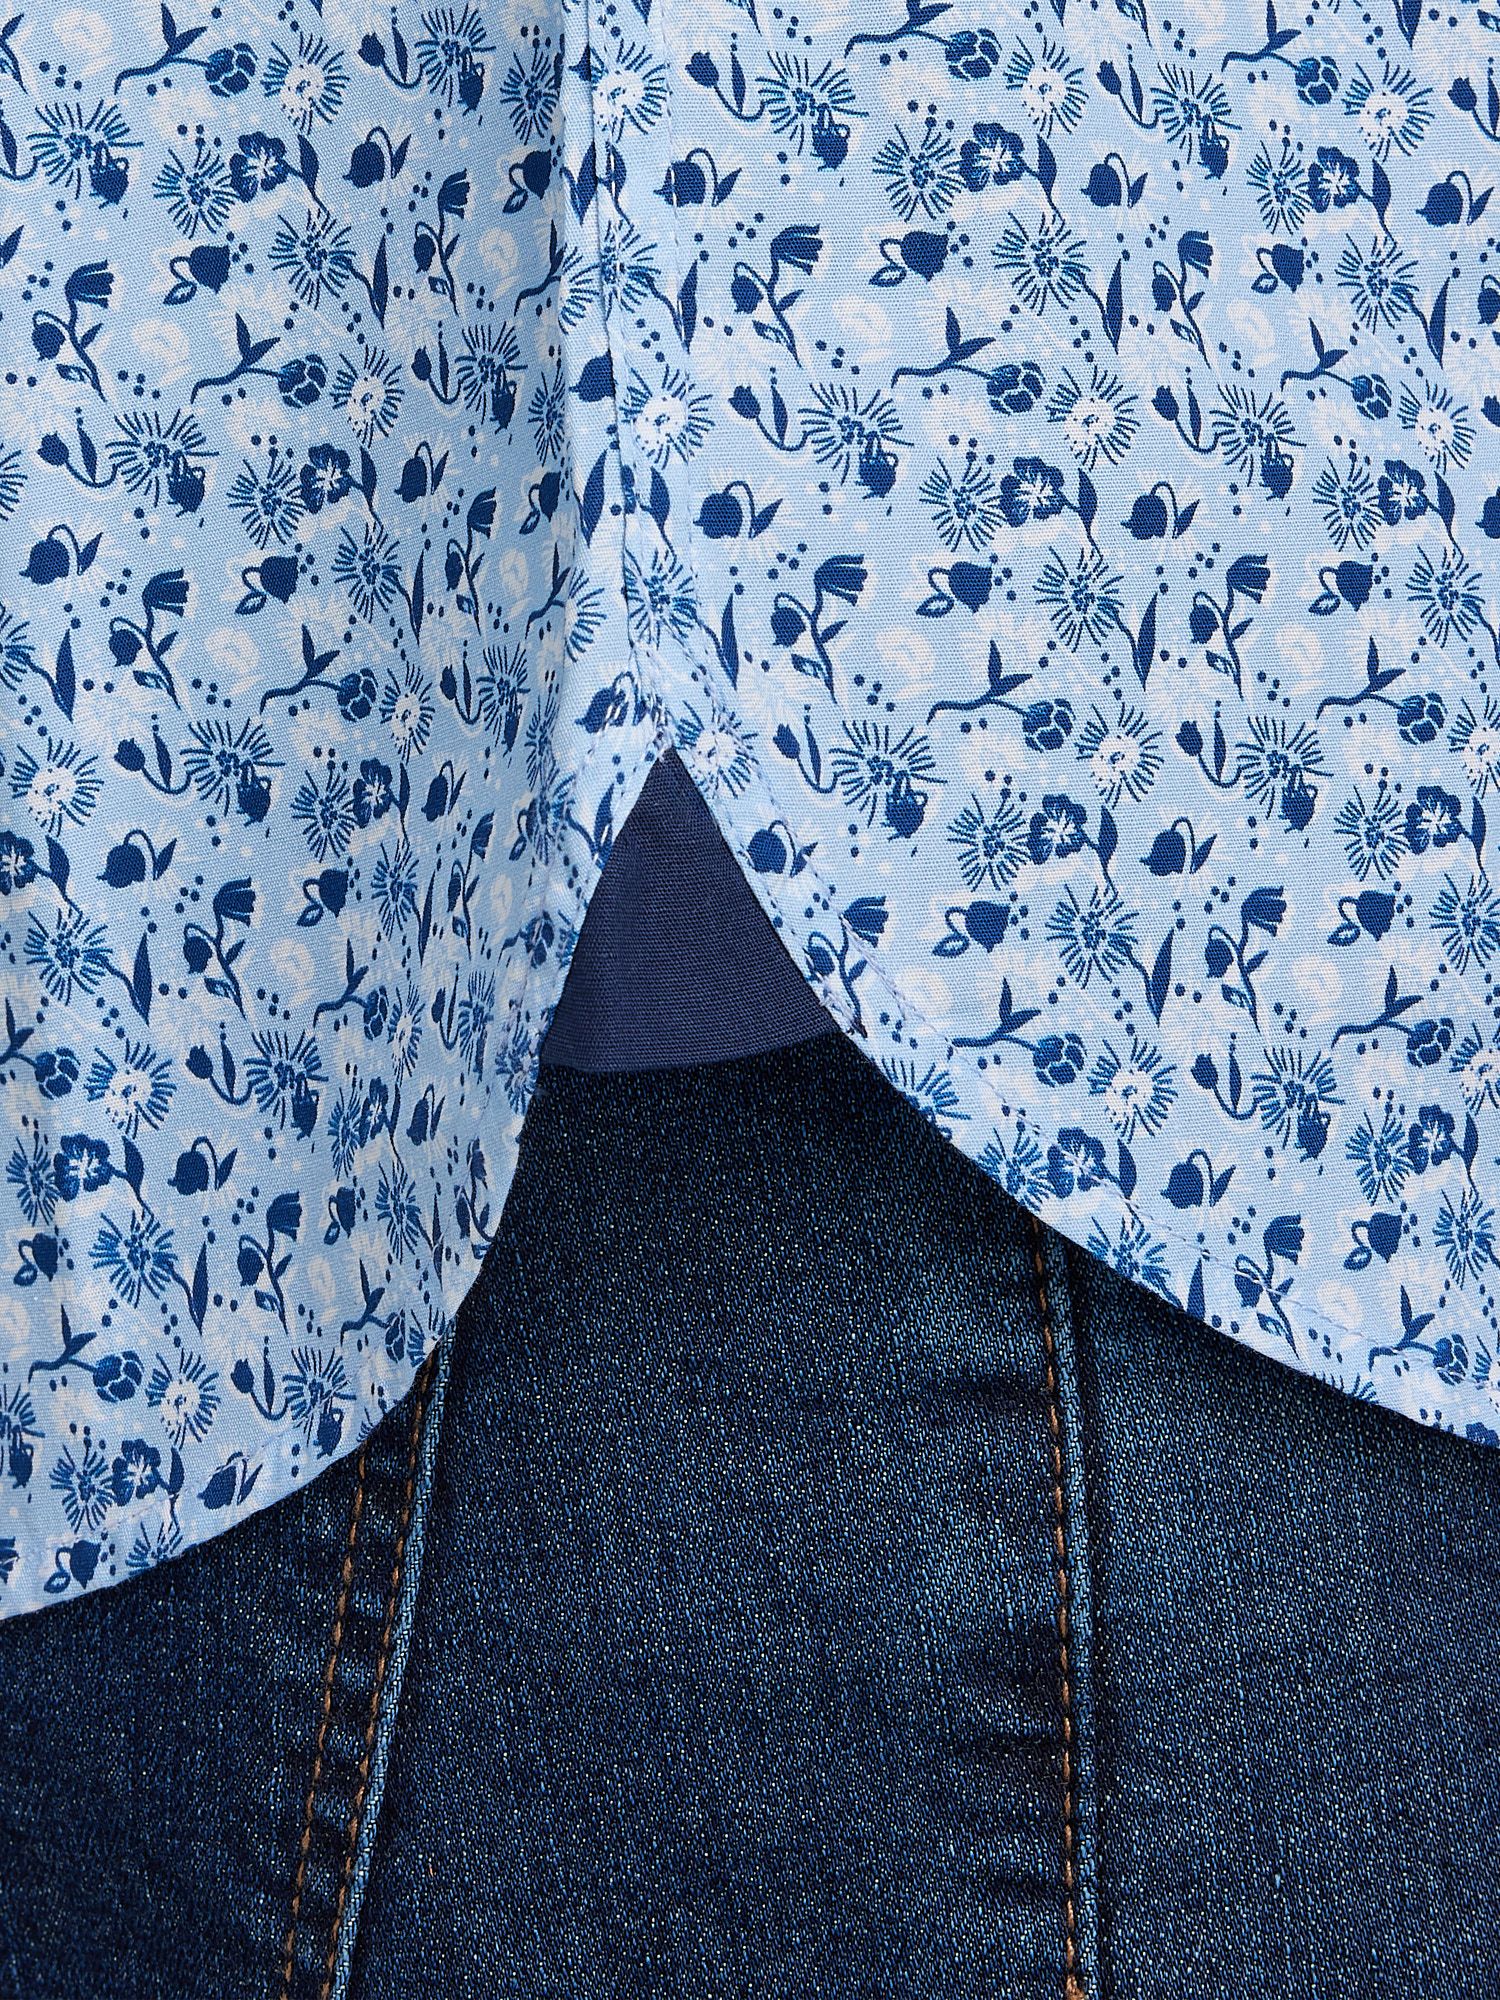 Raging Bull Ditsy Floral Print Short Sleeve Shirt, Mid Blue, XXXXL